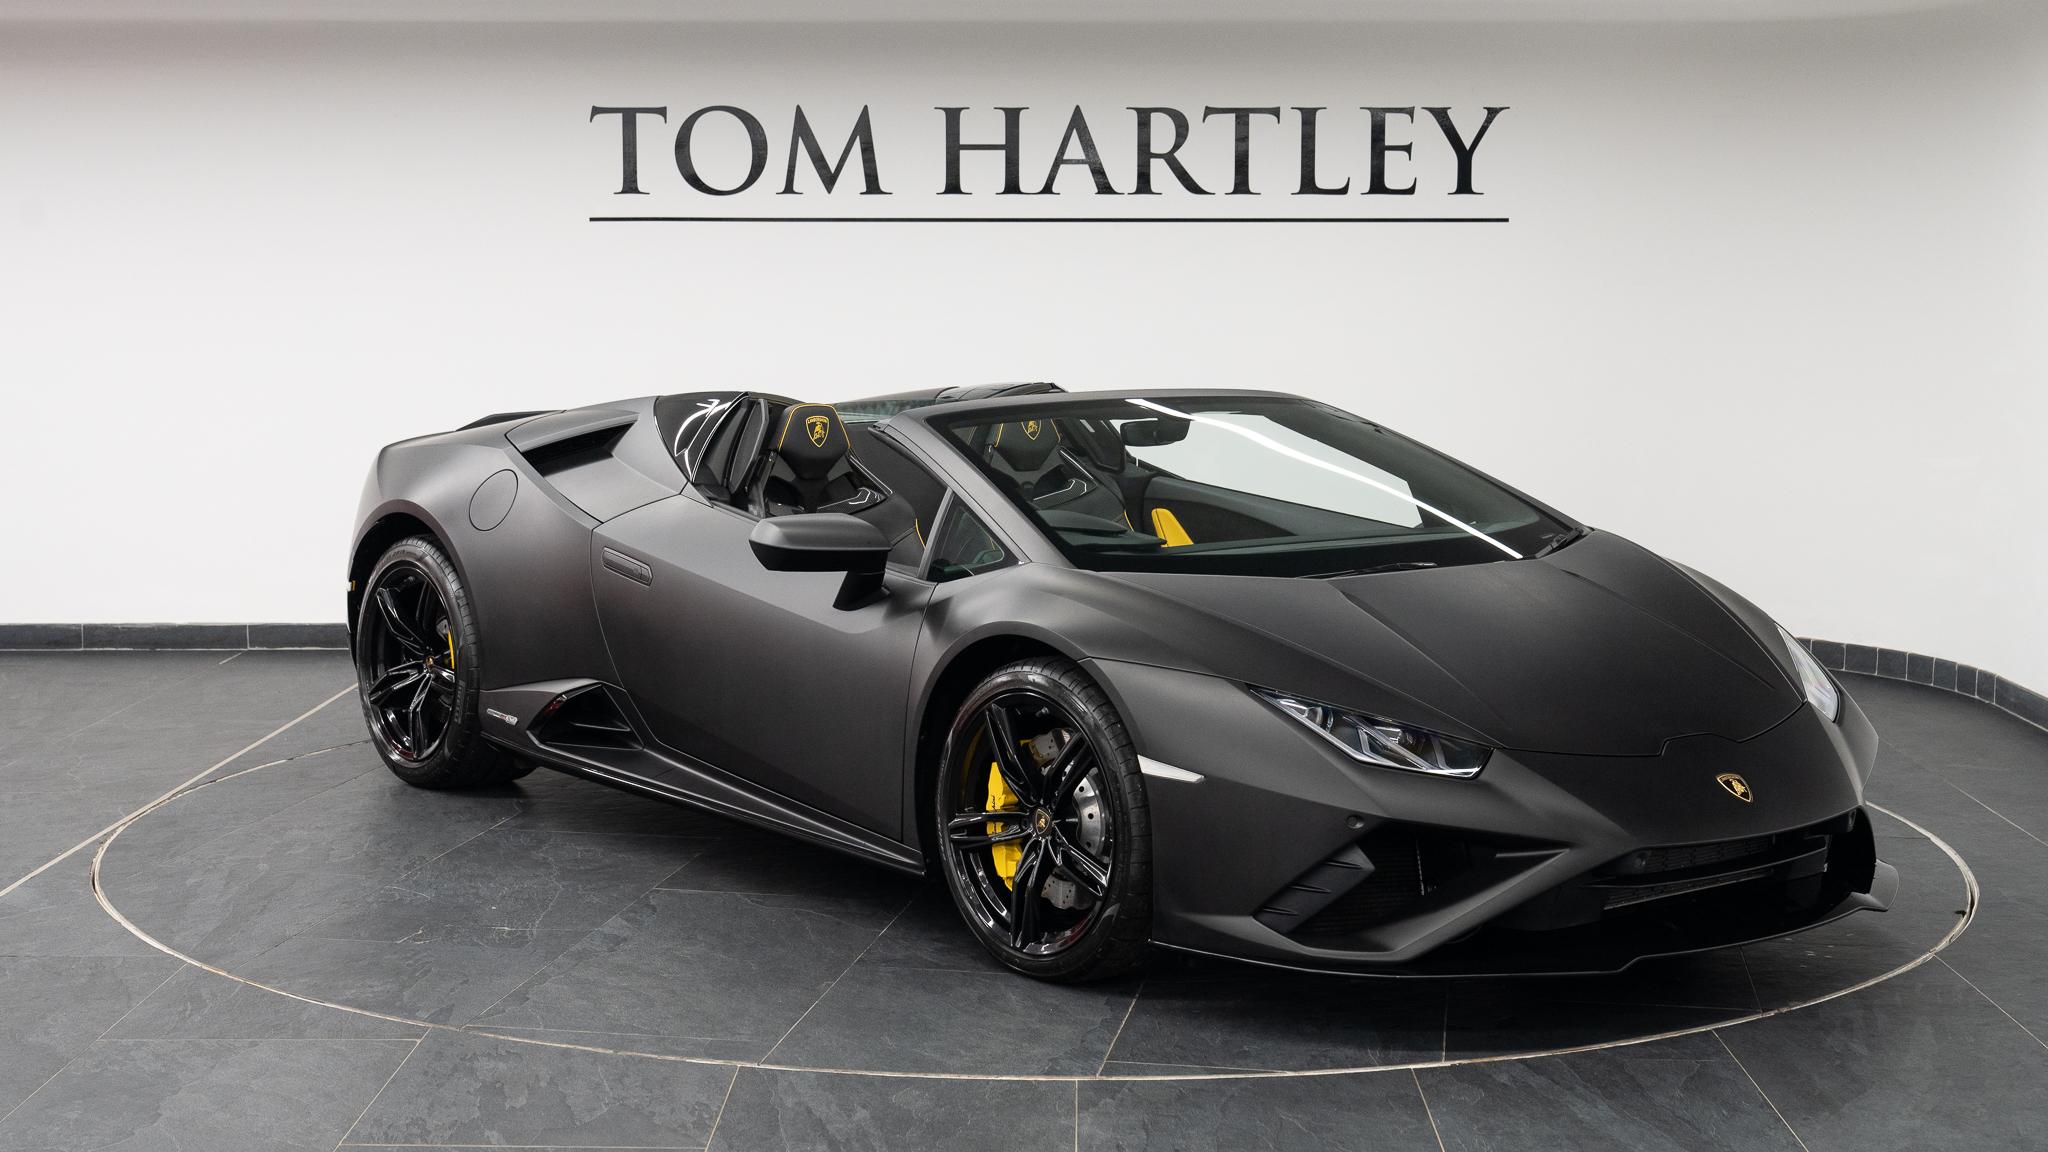 Used 2021 Lamborghini HURACAN LP 610-2 EVO SPYDER £POA 2,000 miles Matt  Black Vinyl Wrap | Tom Hartley